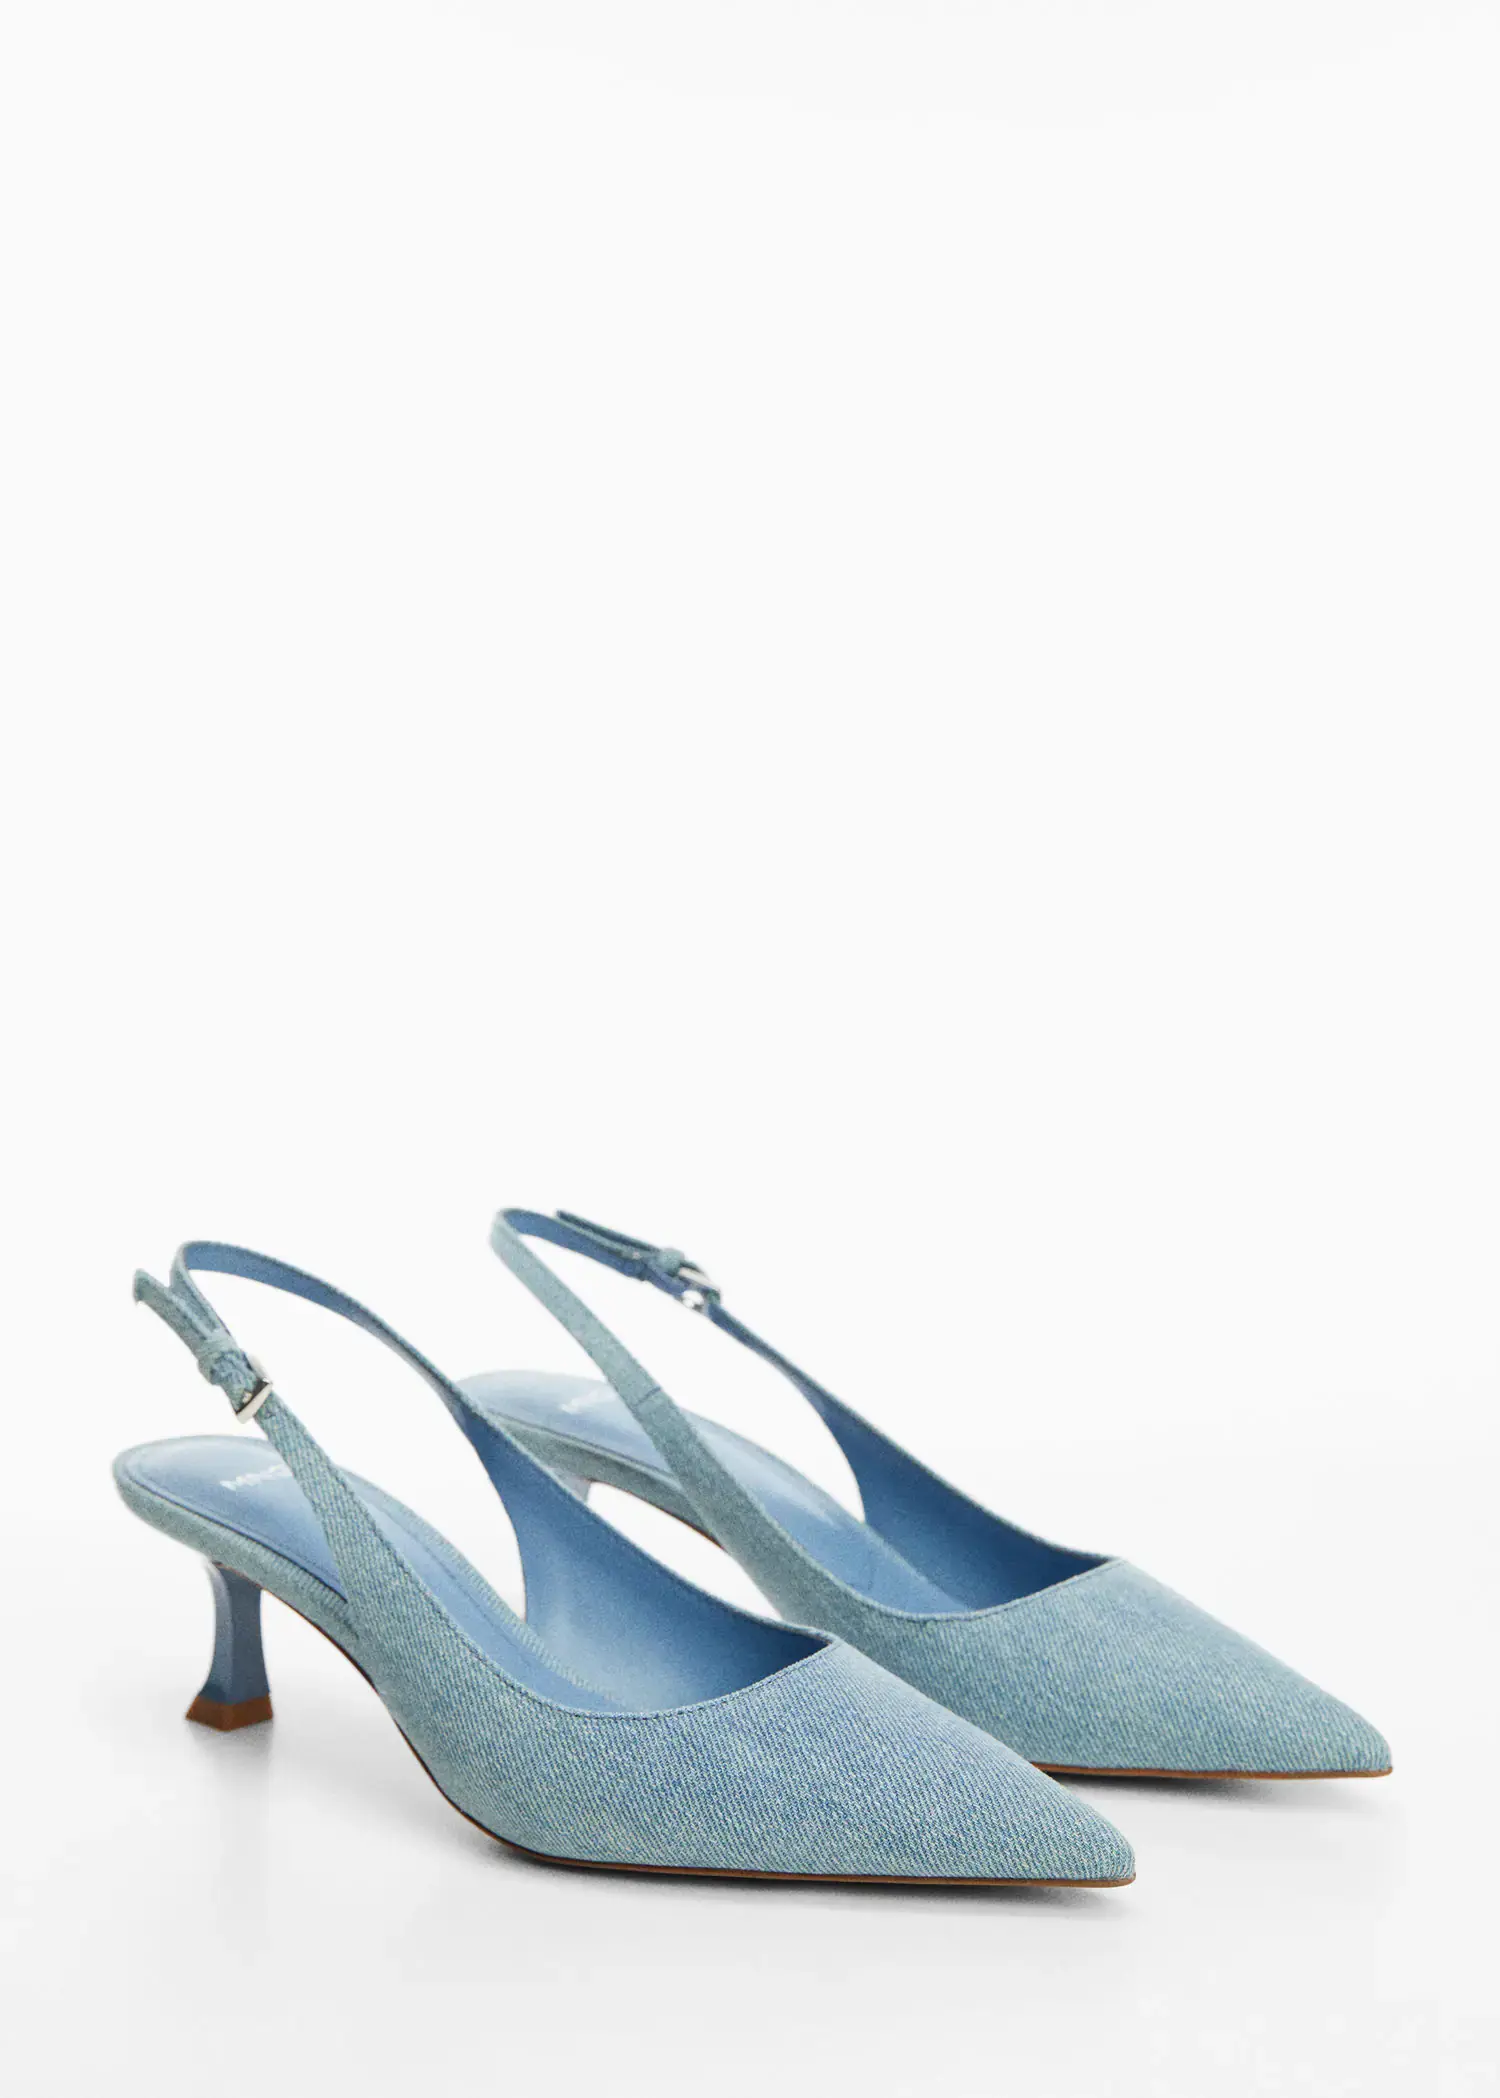 Mango High-heeled denim shoes. 2